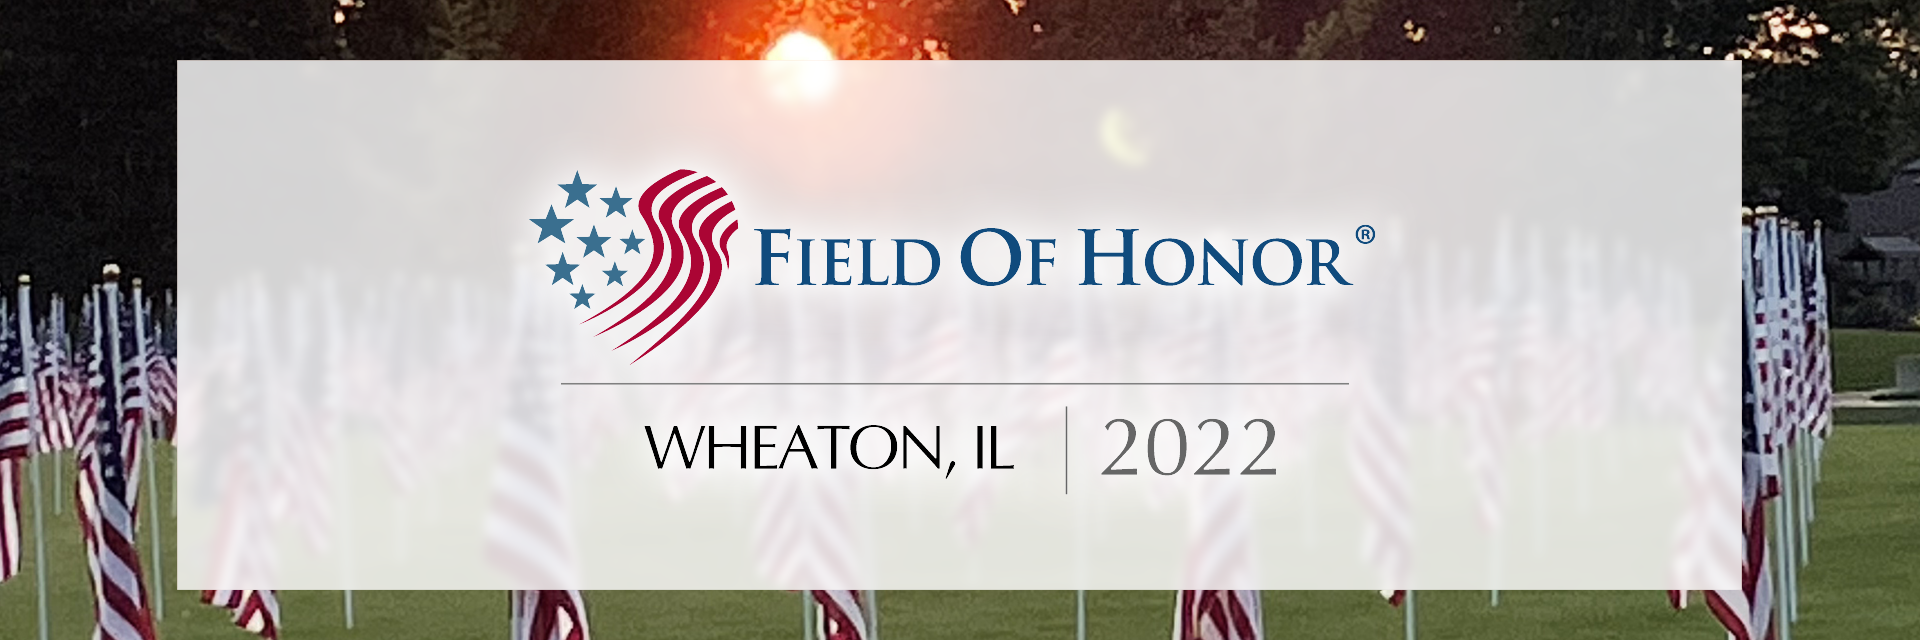 Field of Honor-2022